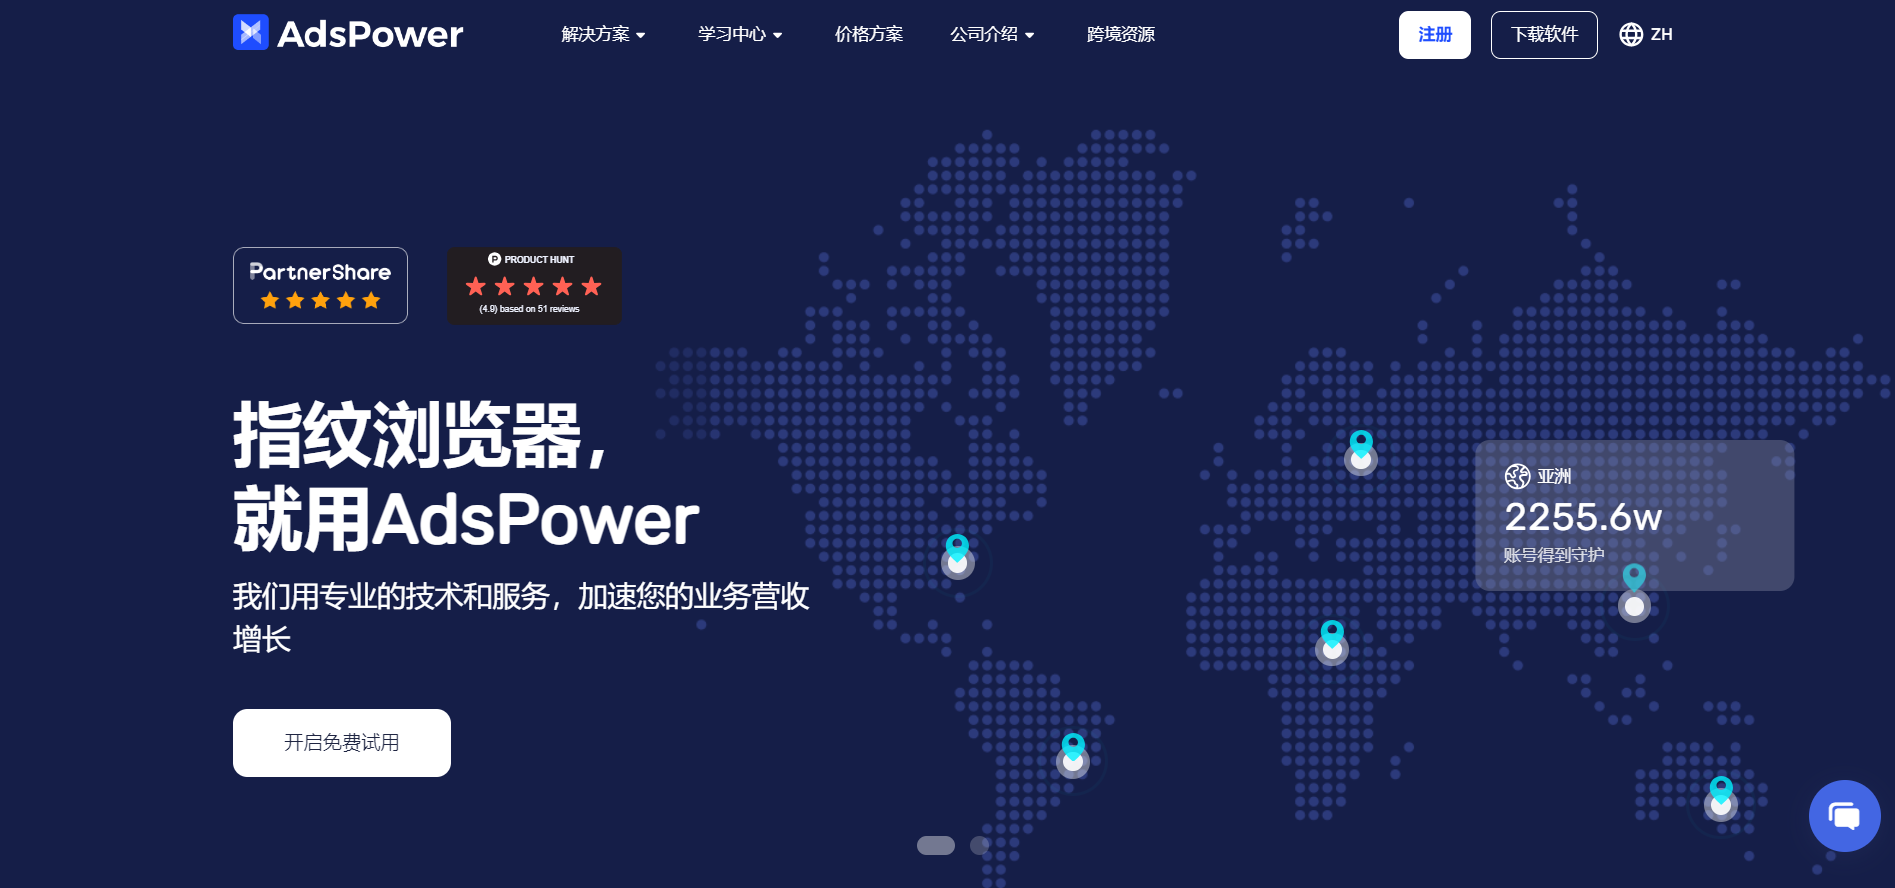 AdsPower 指纹浏览器官网封面截图